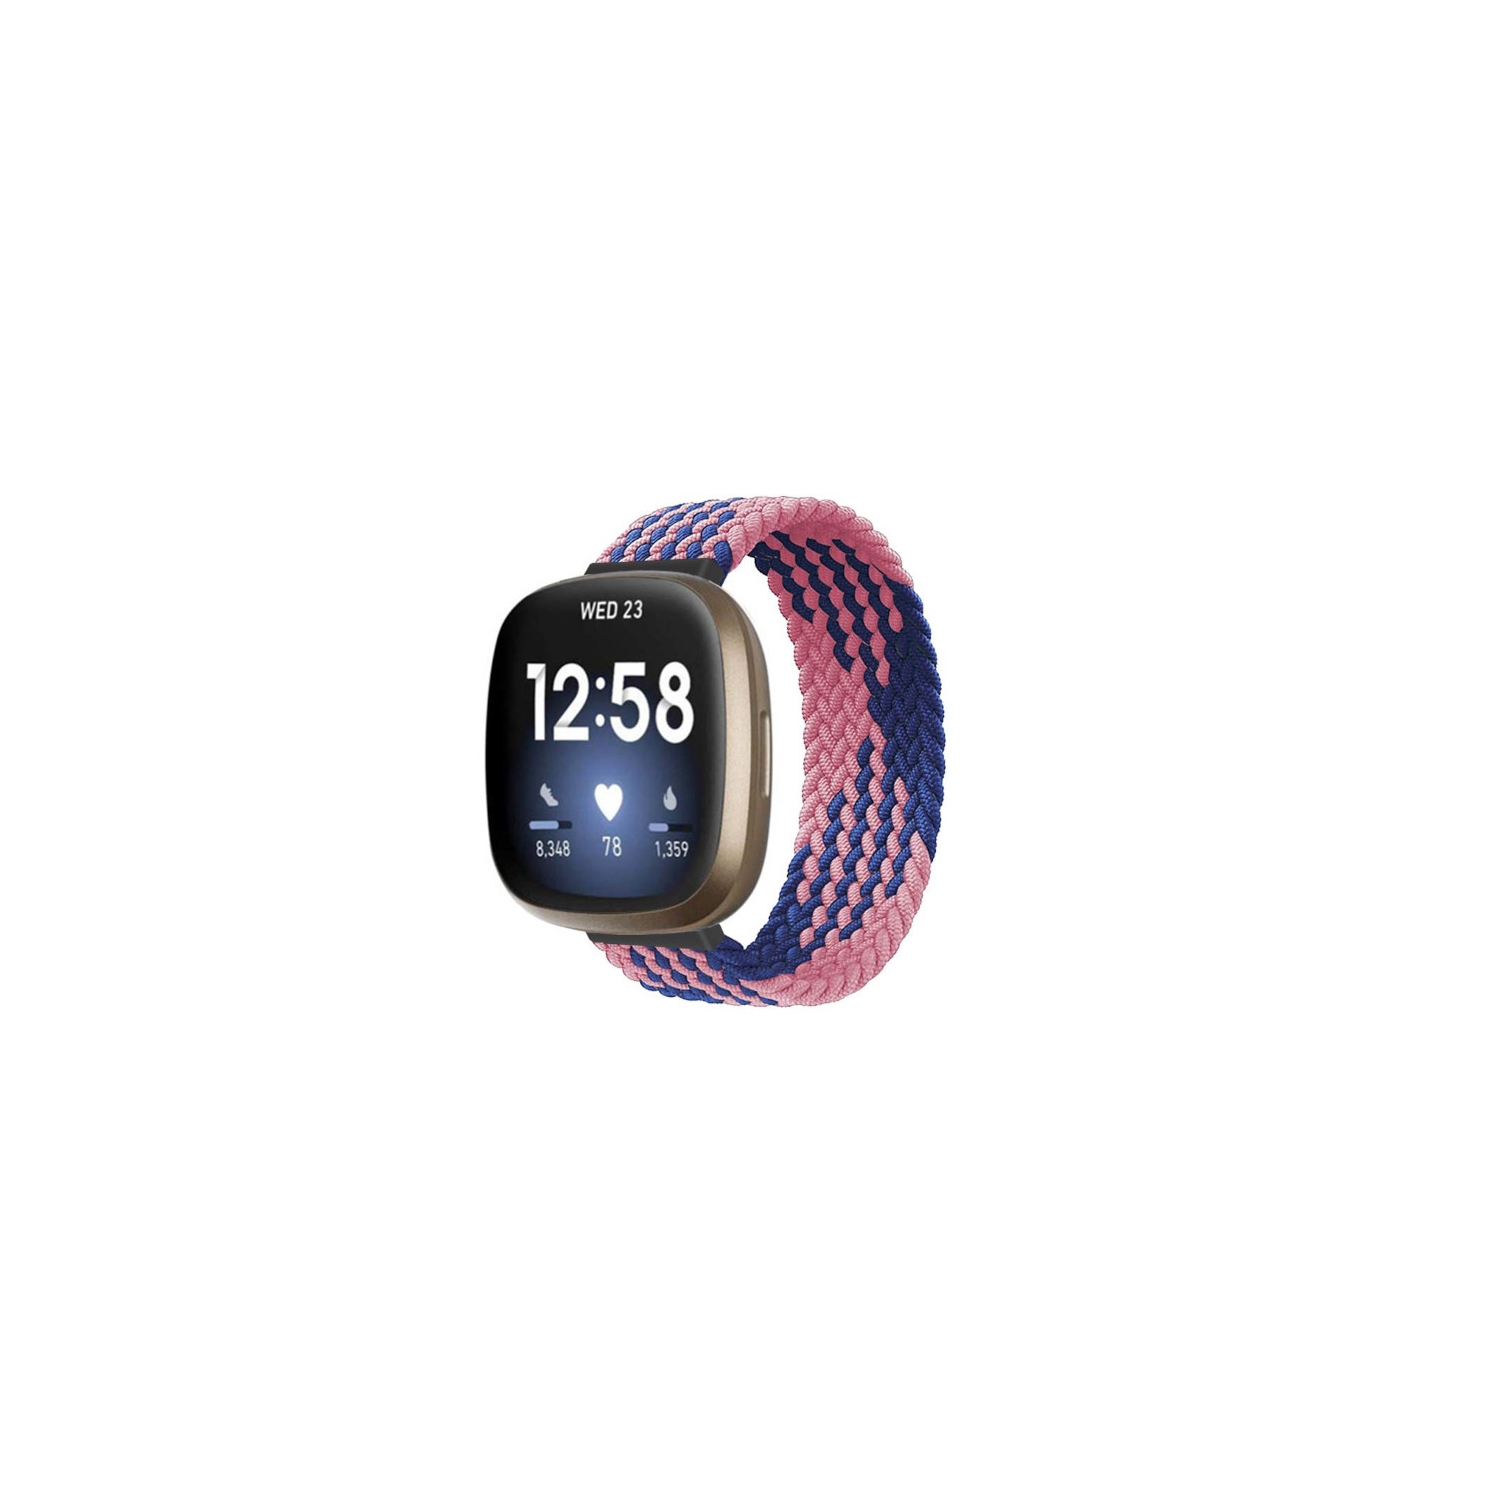 StrapsCo Patterned Elastic Nylon Watch Band Strap for Fitbit Sense - S - Fits 5.8" - 6.1" Wrist - Pink & Blue Buffalo